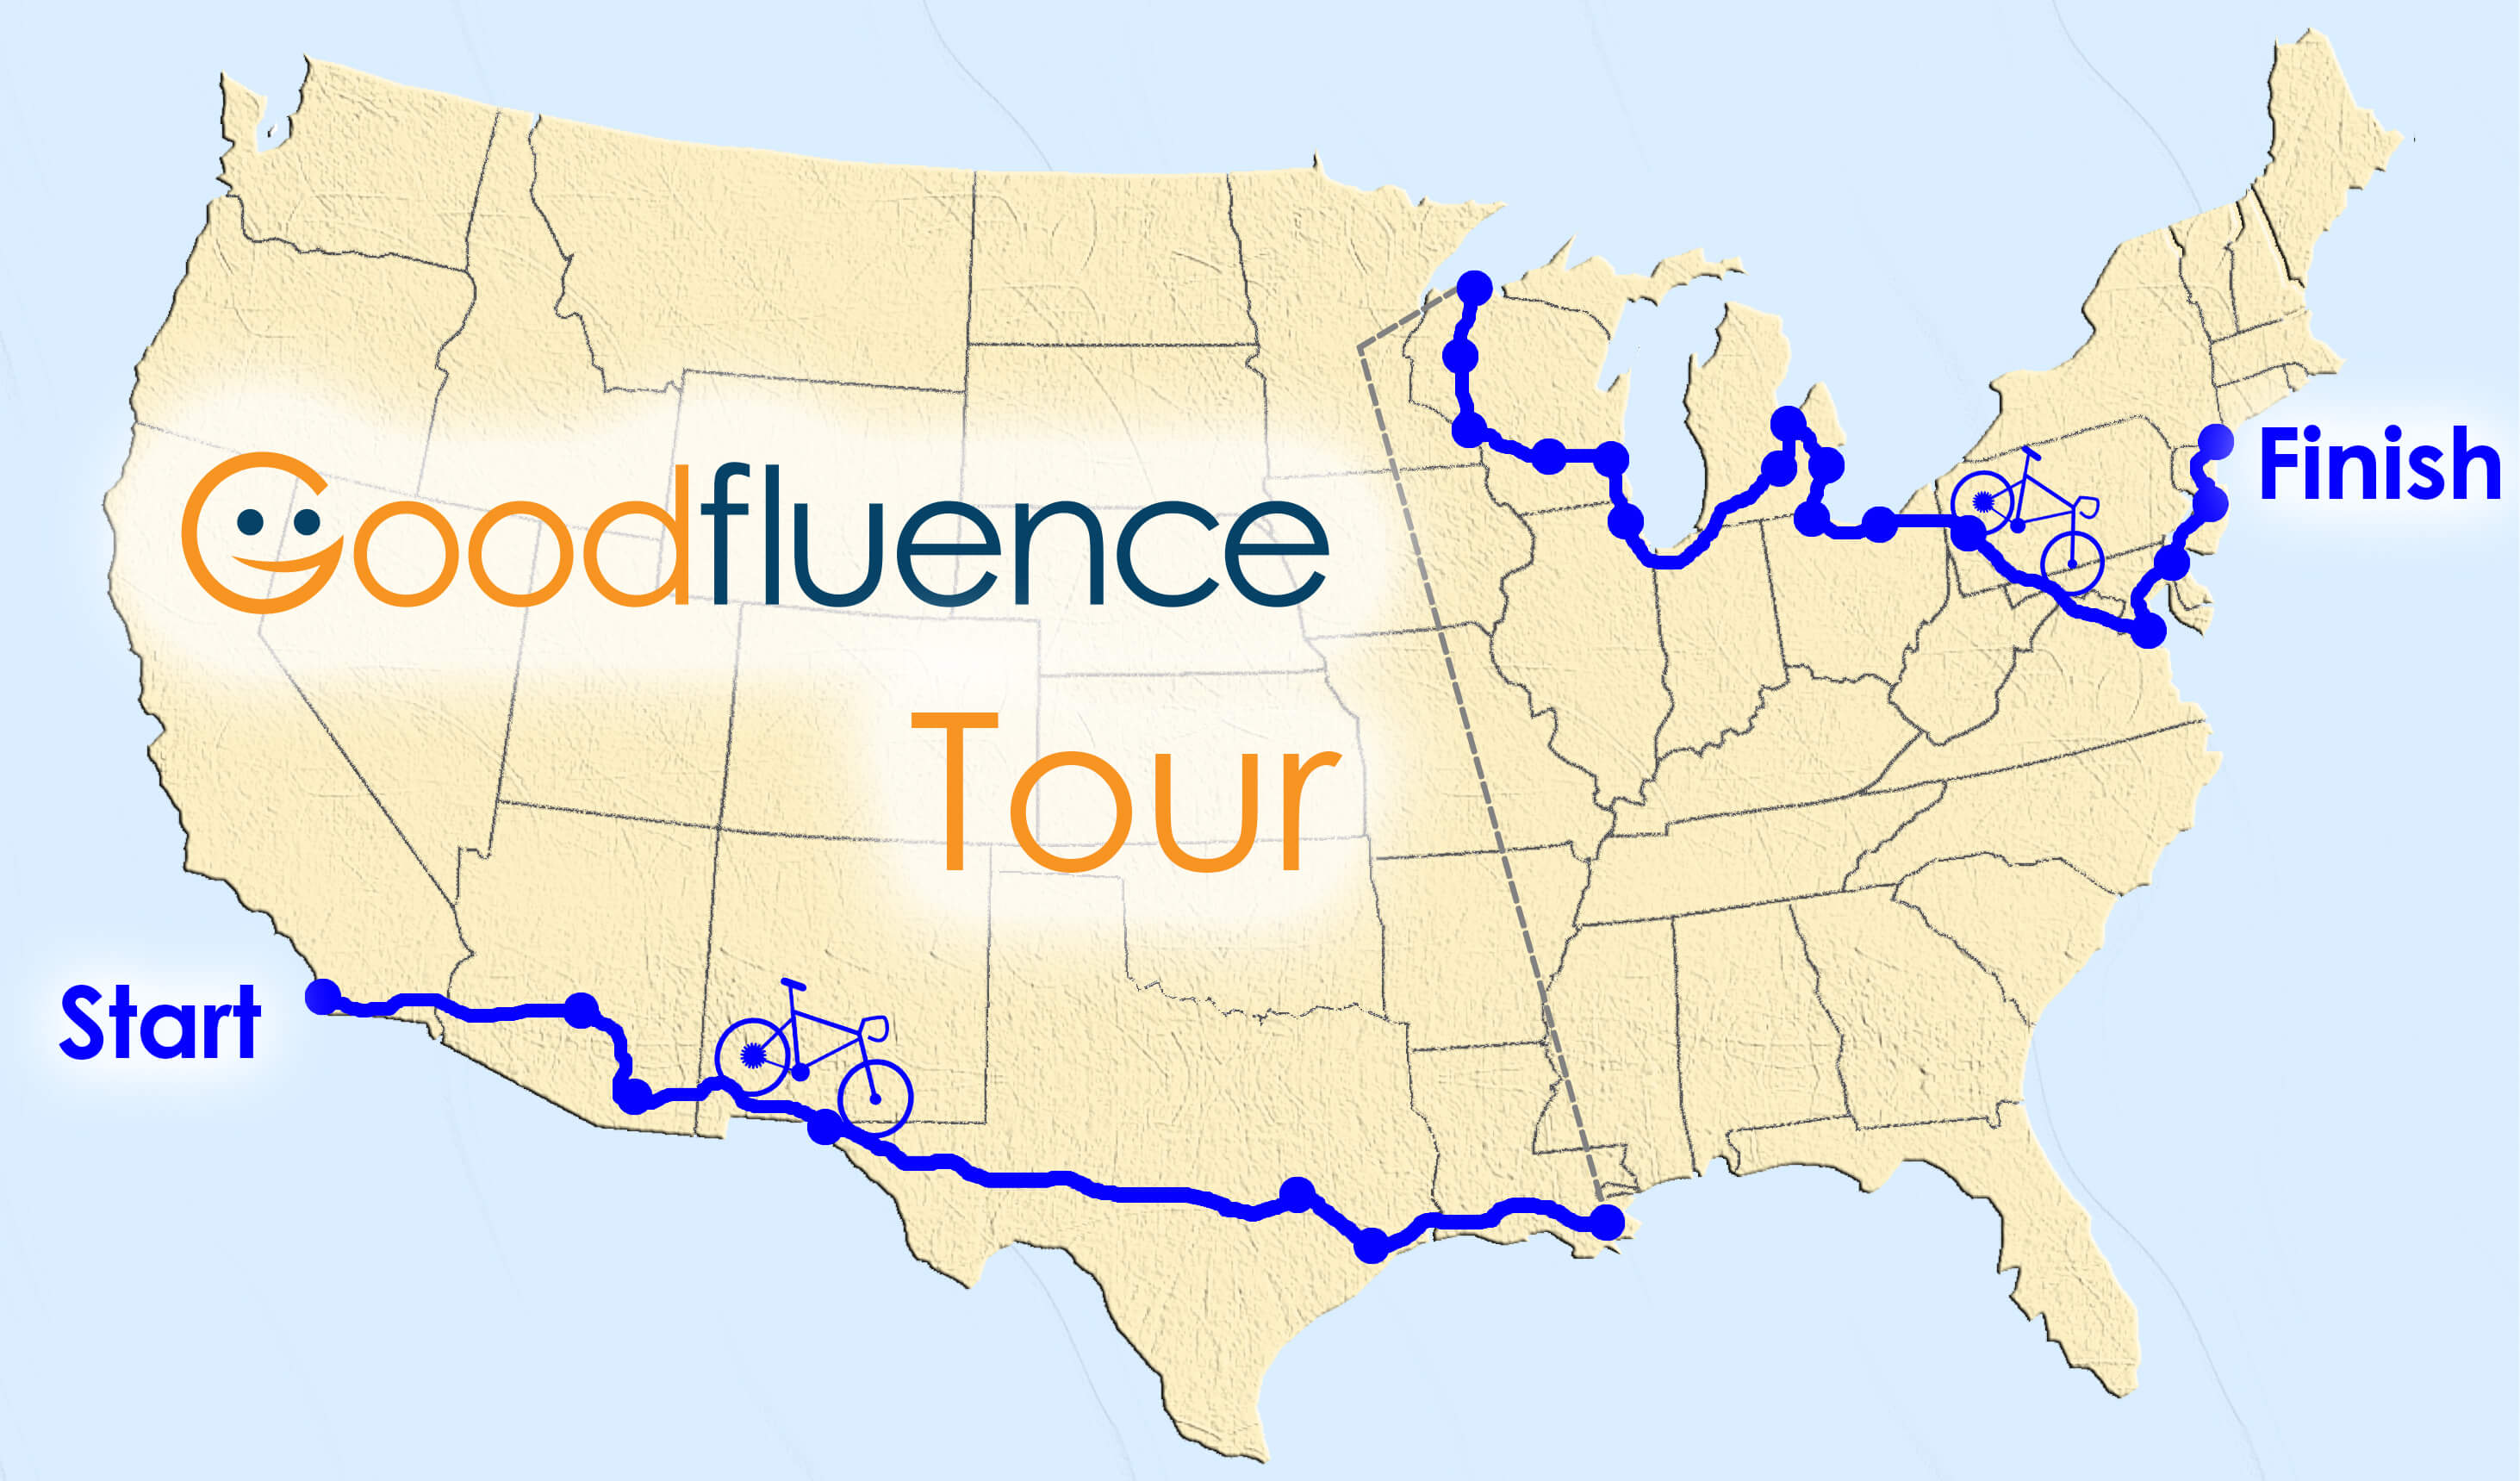 Goodfluence Tour